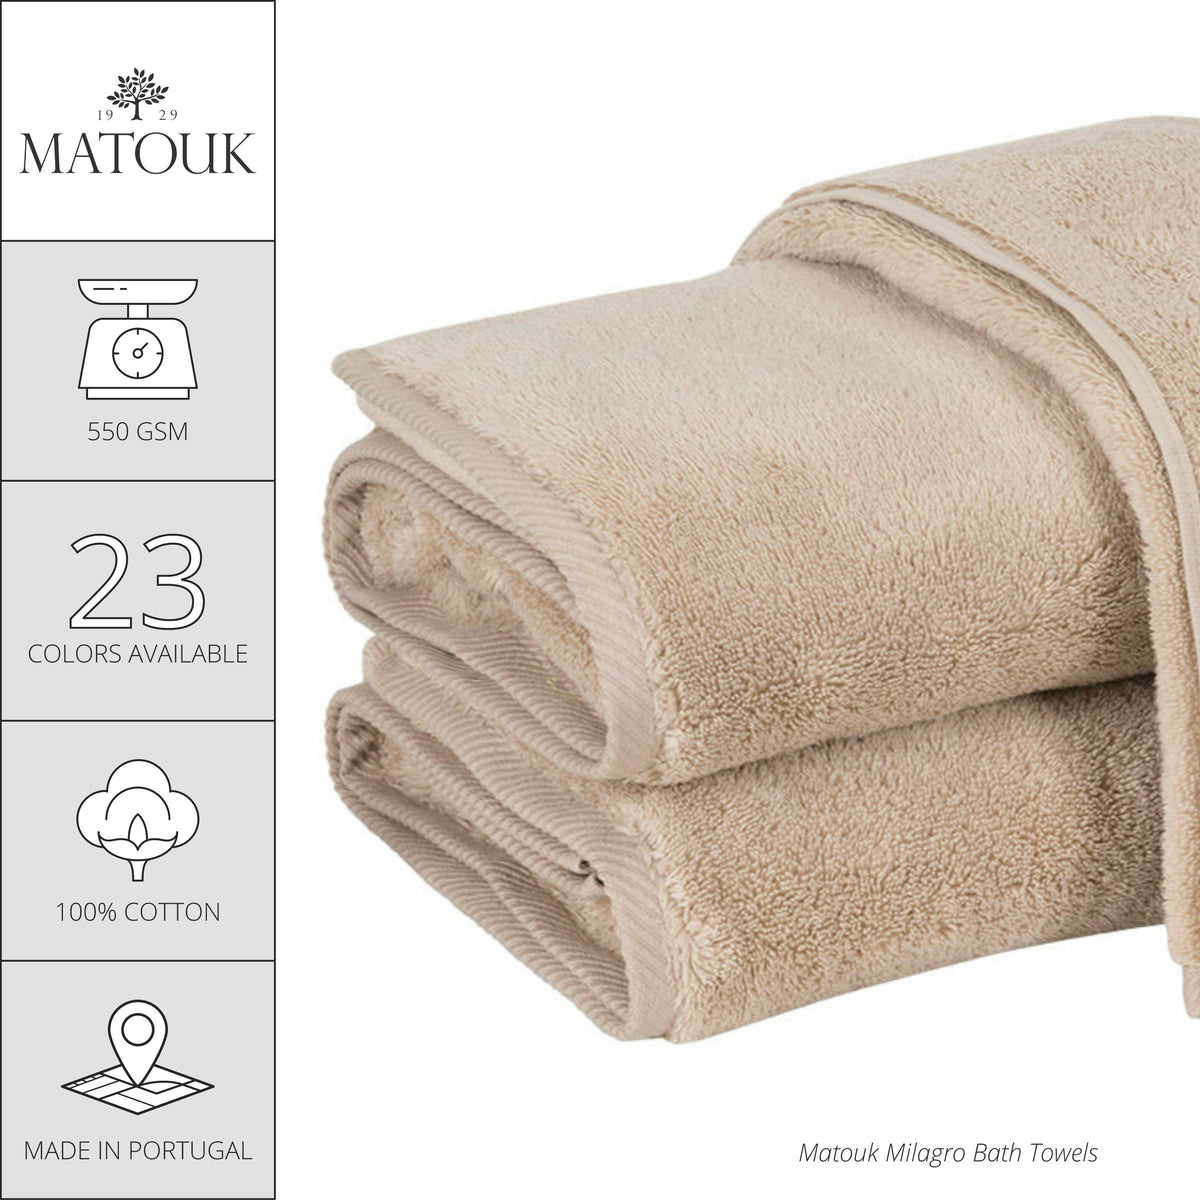 Matouk Milagro Bath Towels and Mats - Steel